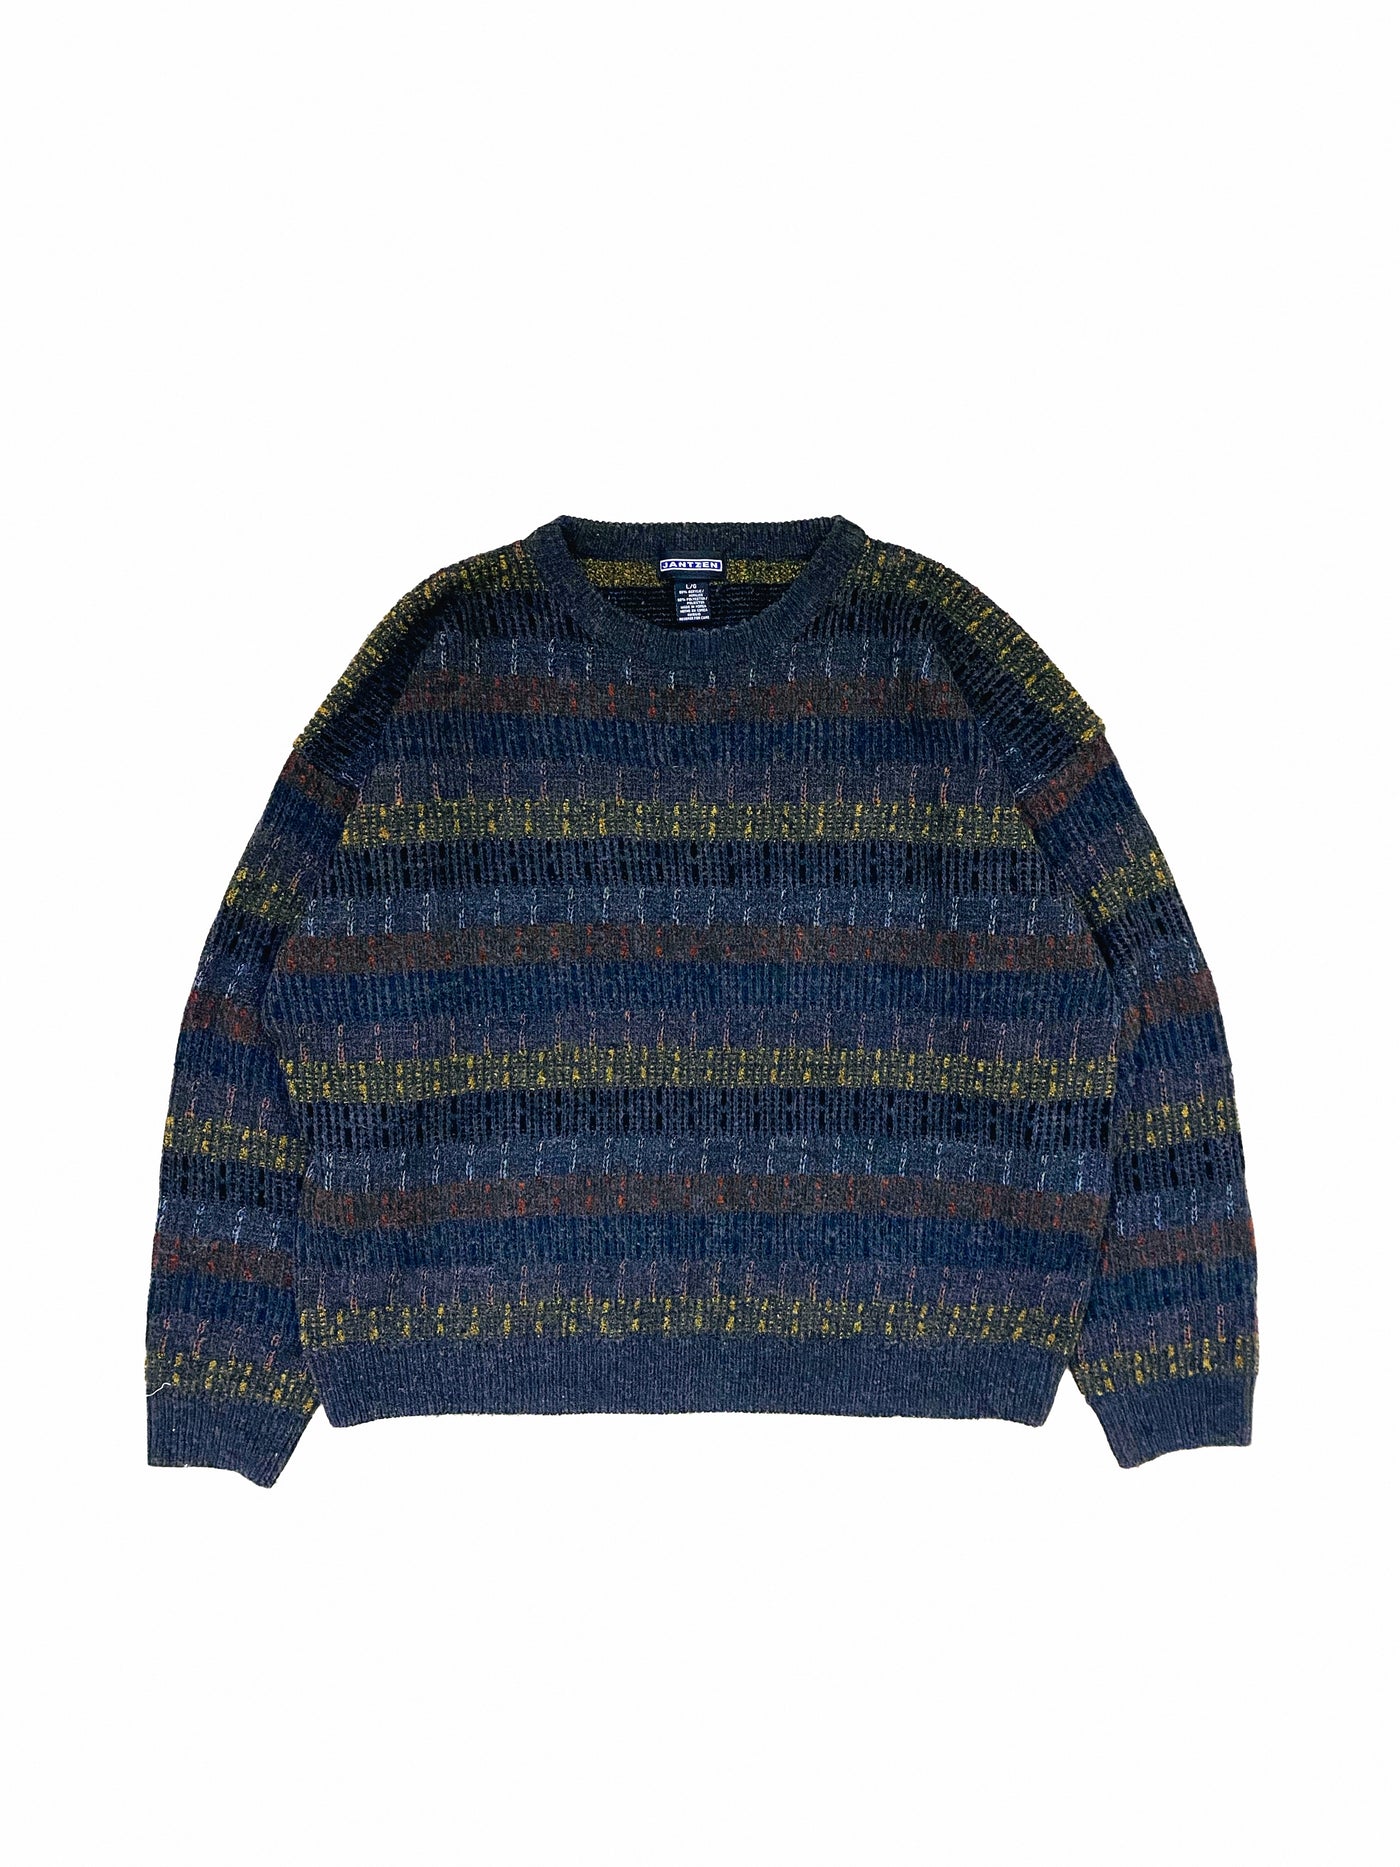 Vintage 90s Knit Sweater